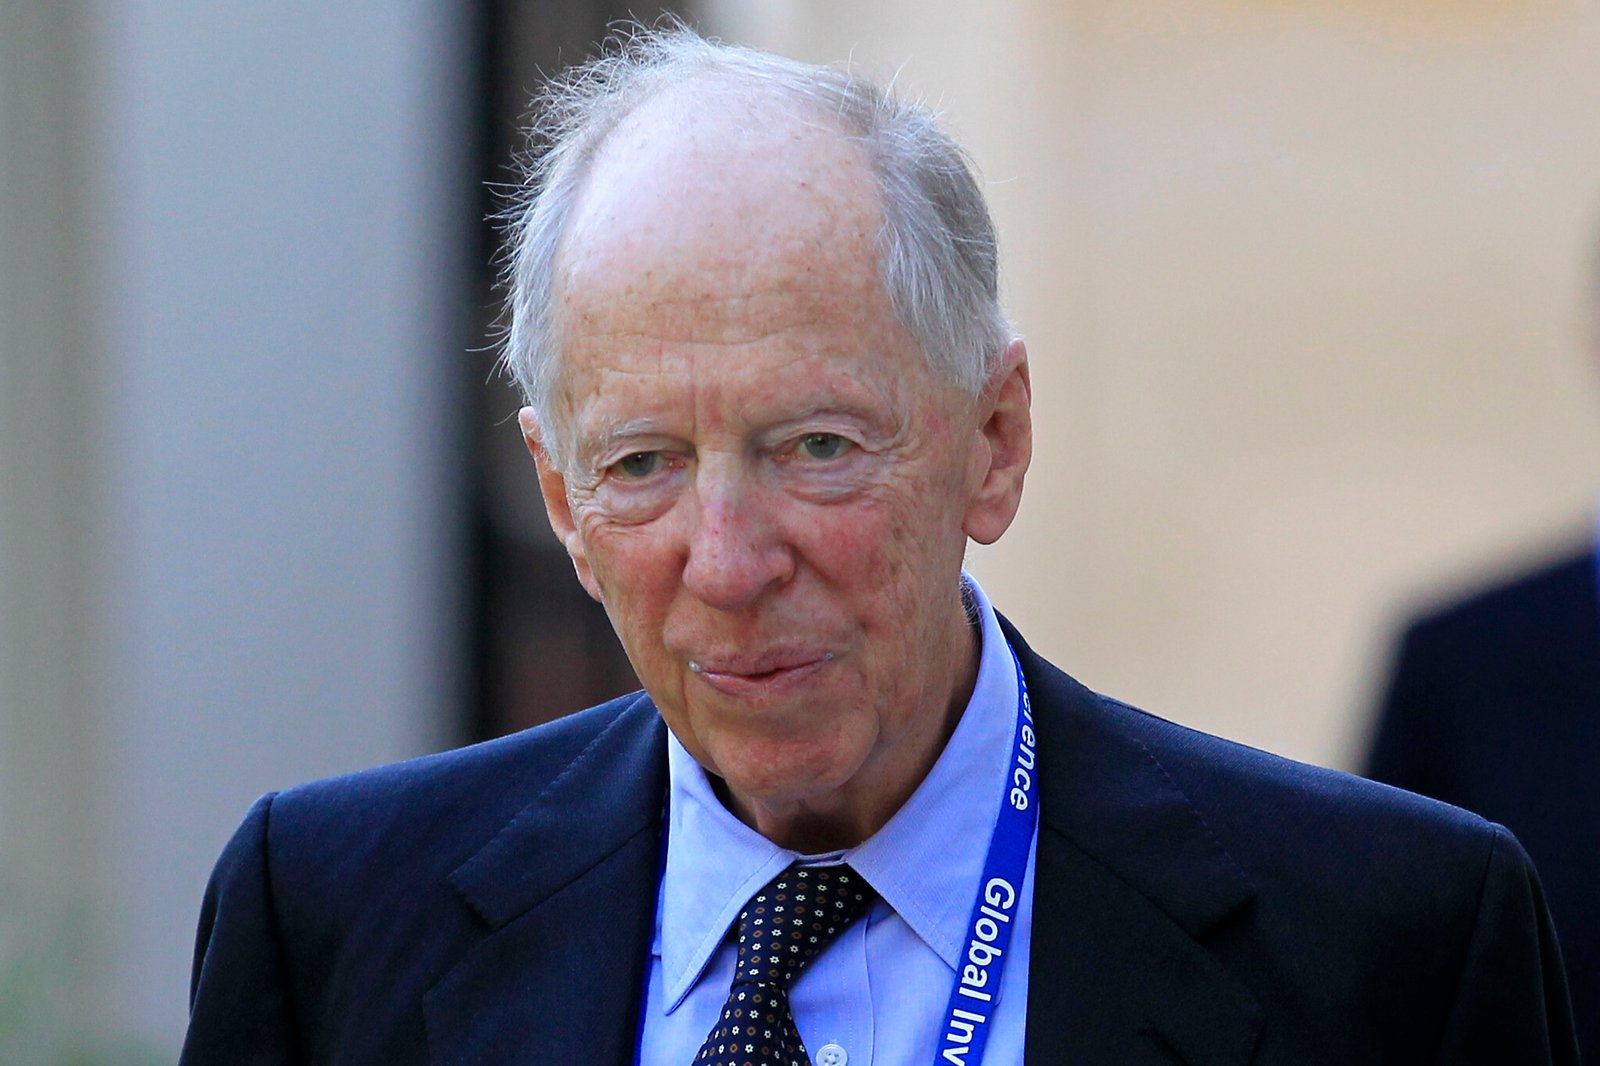 Famous philanthropist Jacob Rothschild died